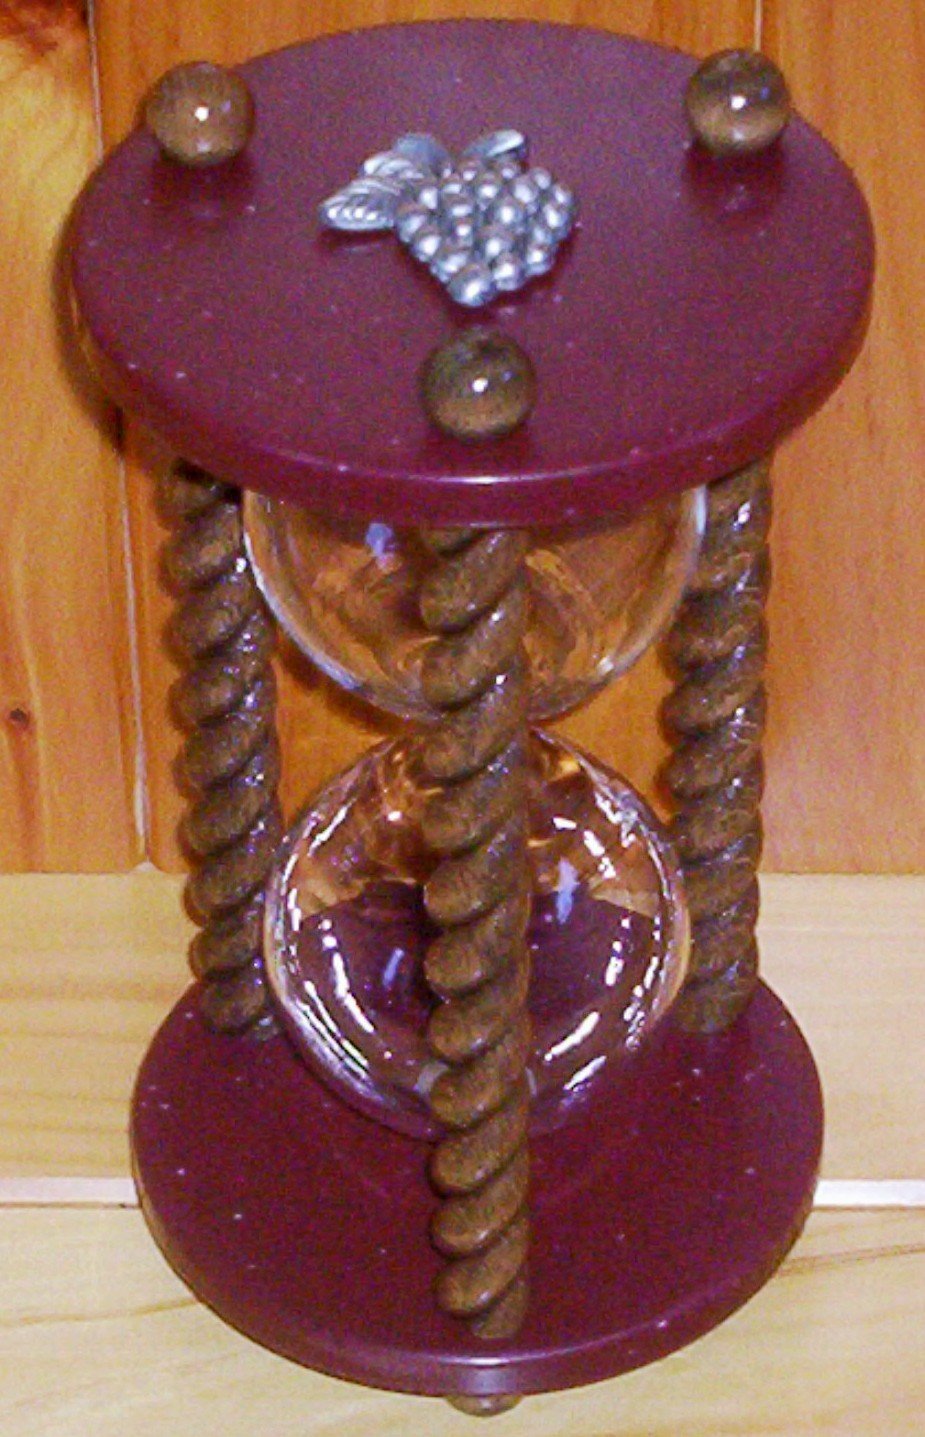 Heirloom Hourglass Unity Sand Ceremony Hourglass Vineyard Wedding Unity Sand Ceremony Hourglass by Heirloom Hourglass